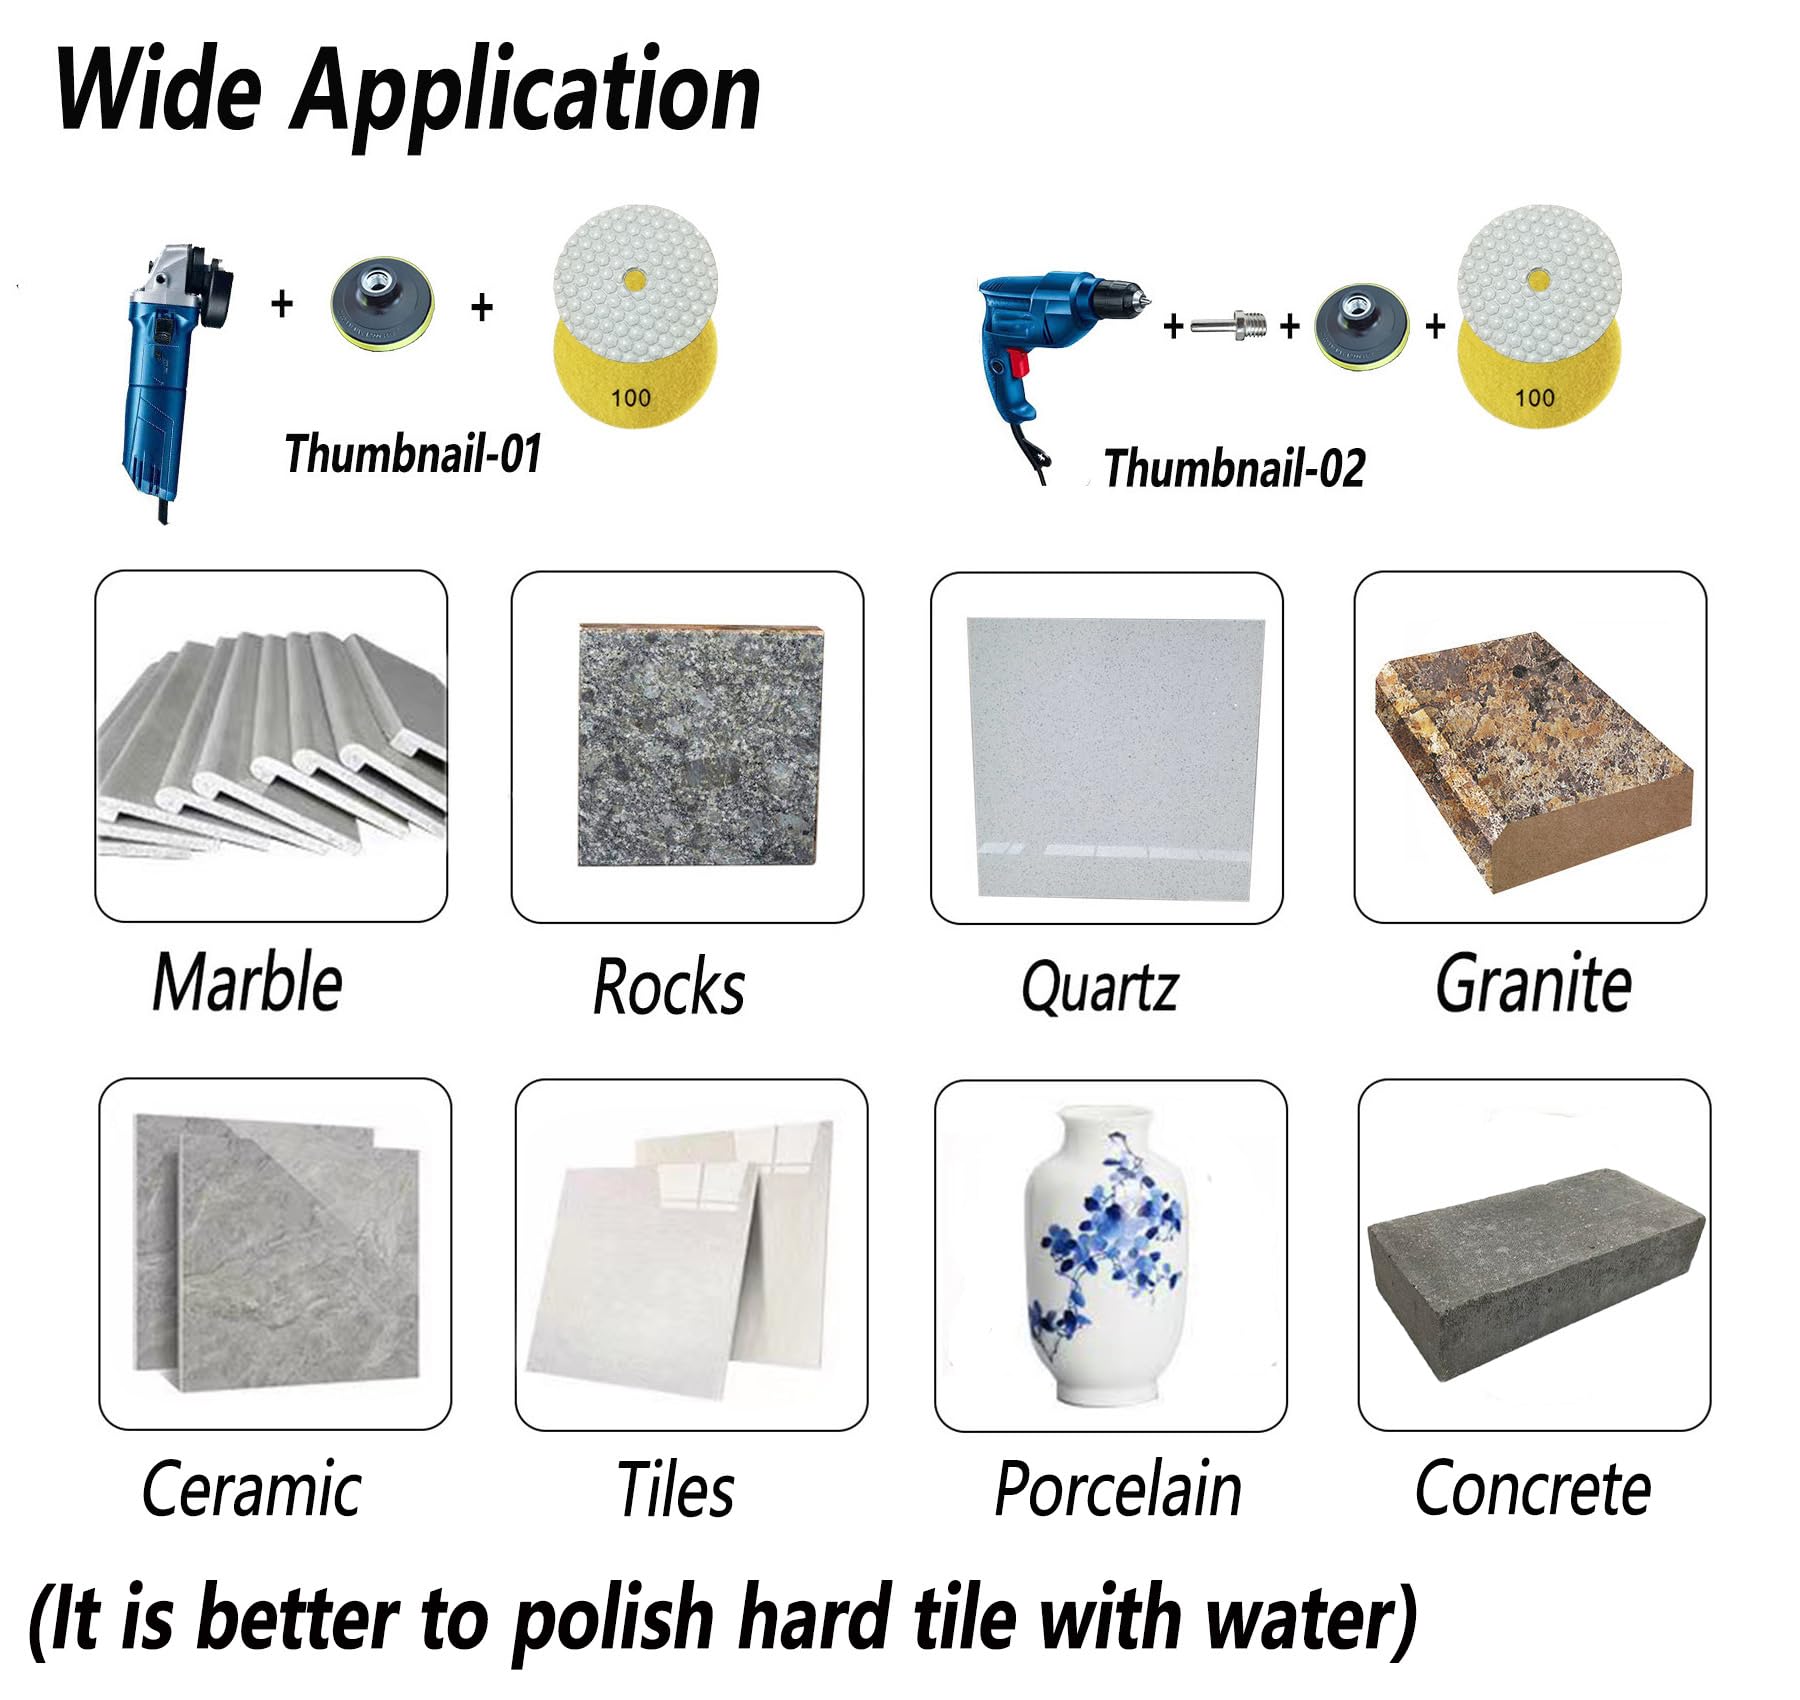 16 Packs Dry Diamond Polishing Pads Grit 400, 4 Inch Dry/Wet Granite Sanding Pad for Bufffing Marble Quartz Concrete Stone Tiles Used for Grinder Polisher Drill